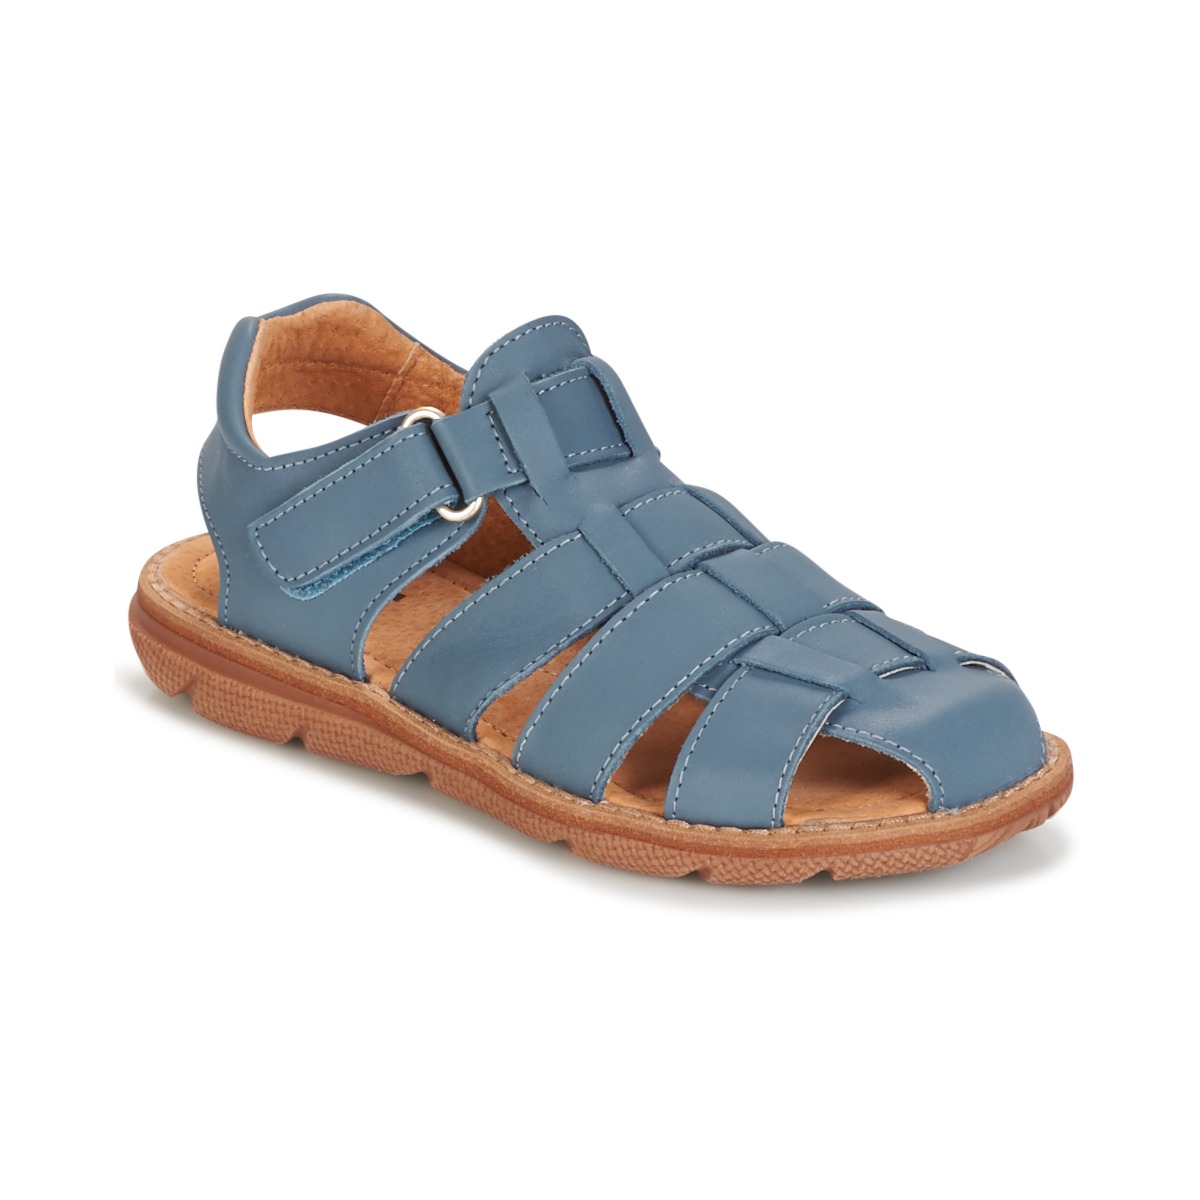 Schuhe Jungen Sandalen / Sandaletten Citrouille et Compagnie GLENO Blau